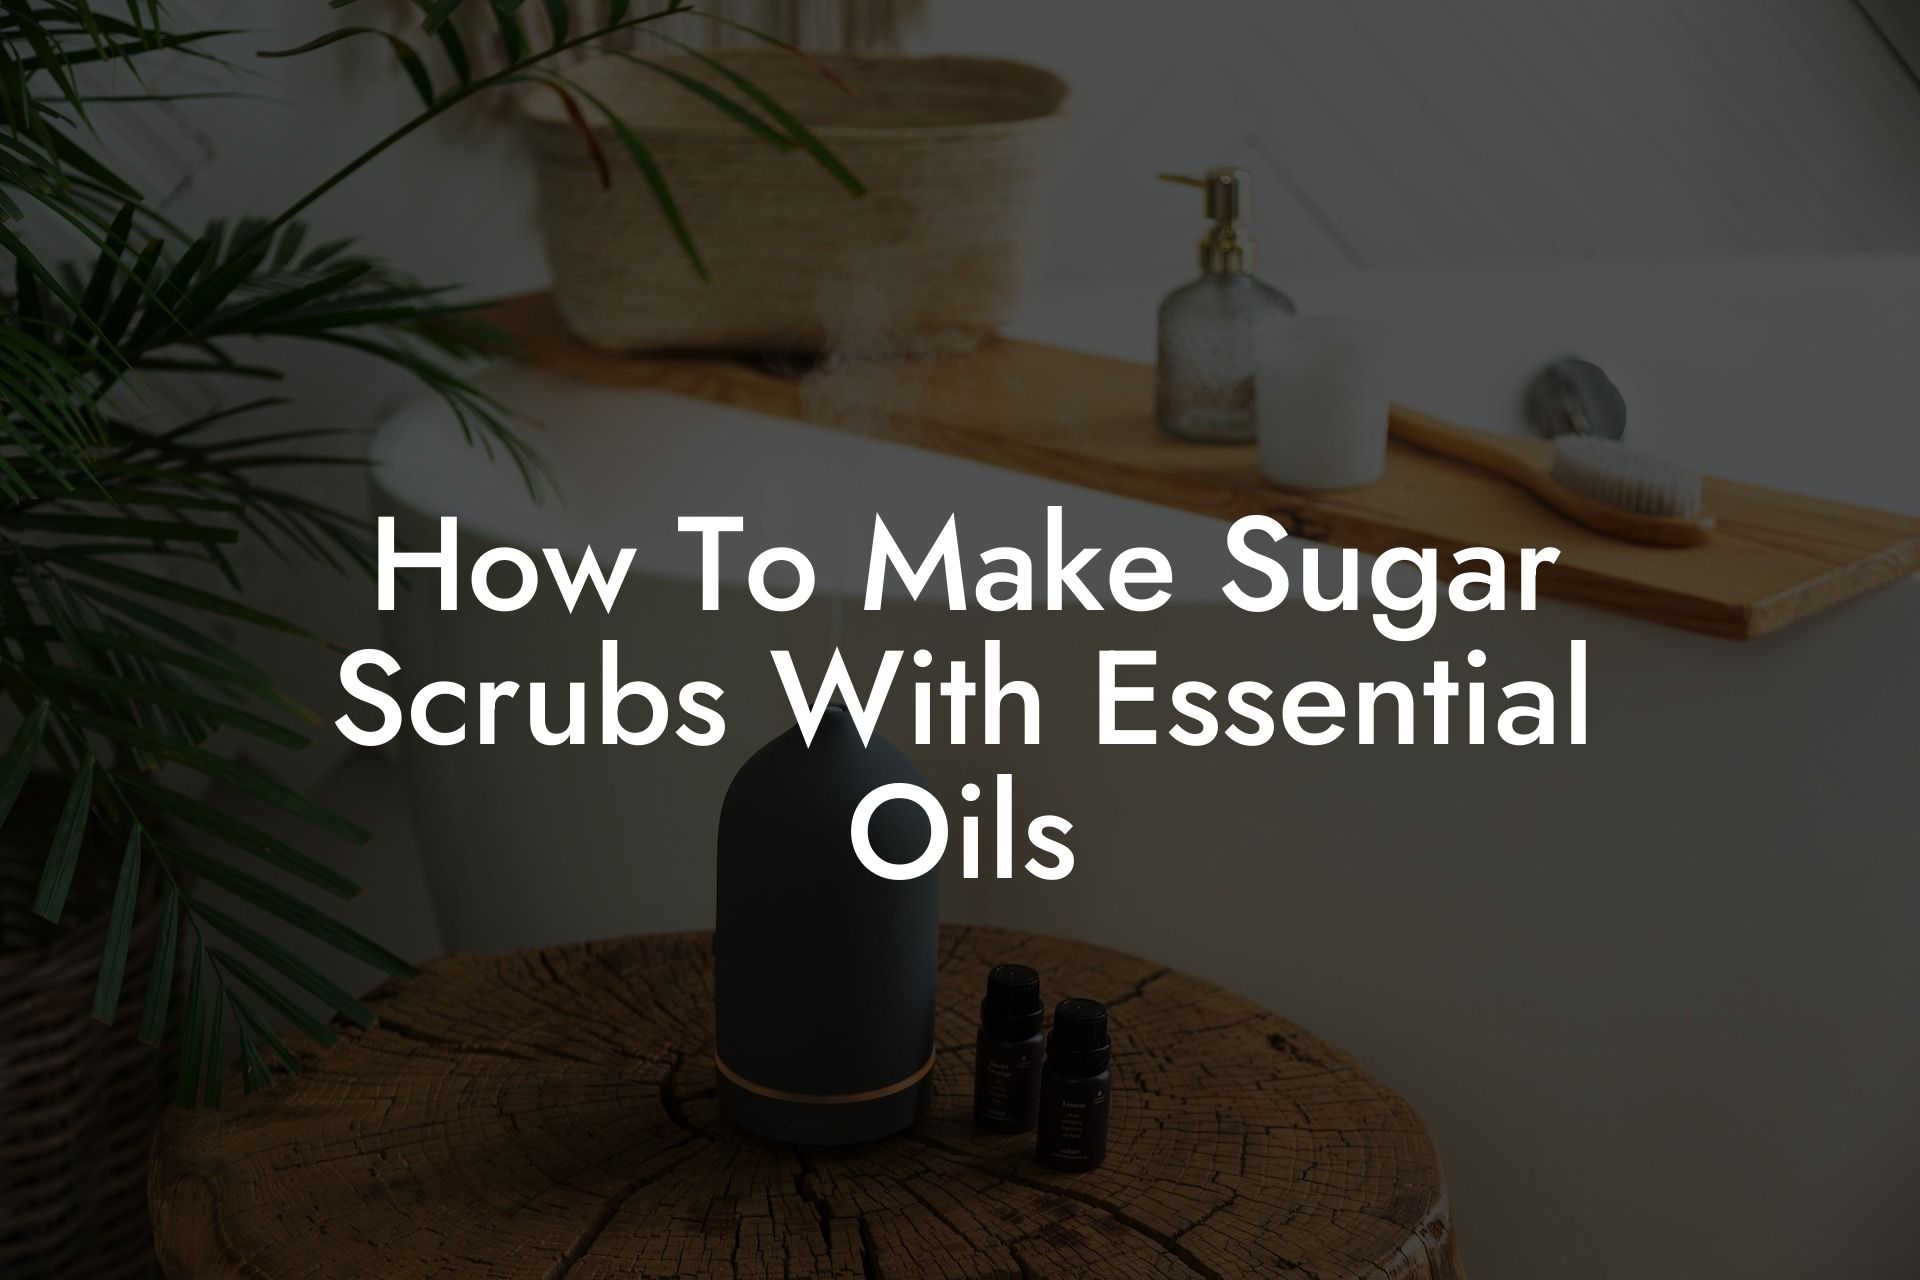 How To Make Sugar Scrubs With Essential Oils